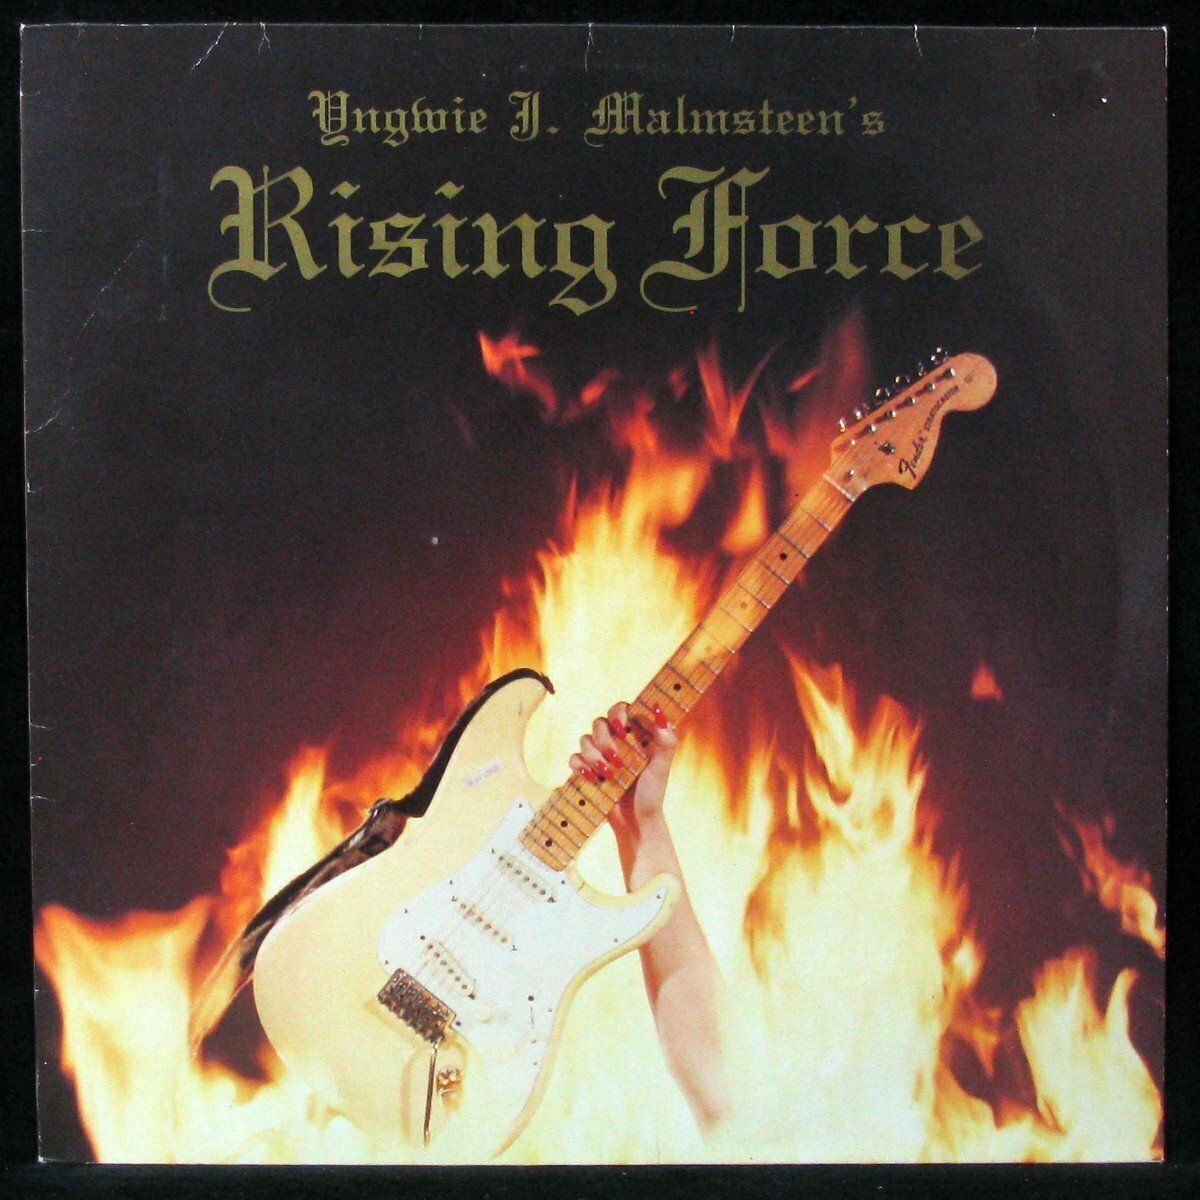 0600753757994, Виниловая пластинка Malmsteen, Yngwie, Rising Force dream evil dream evil six lp cd